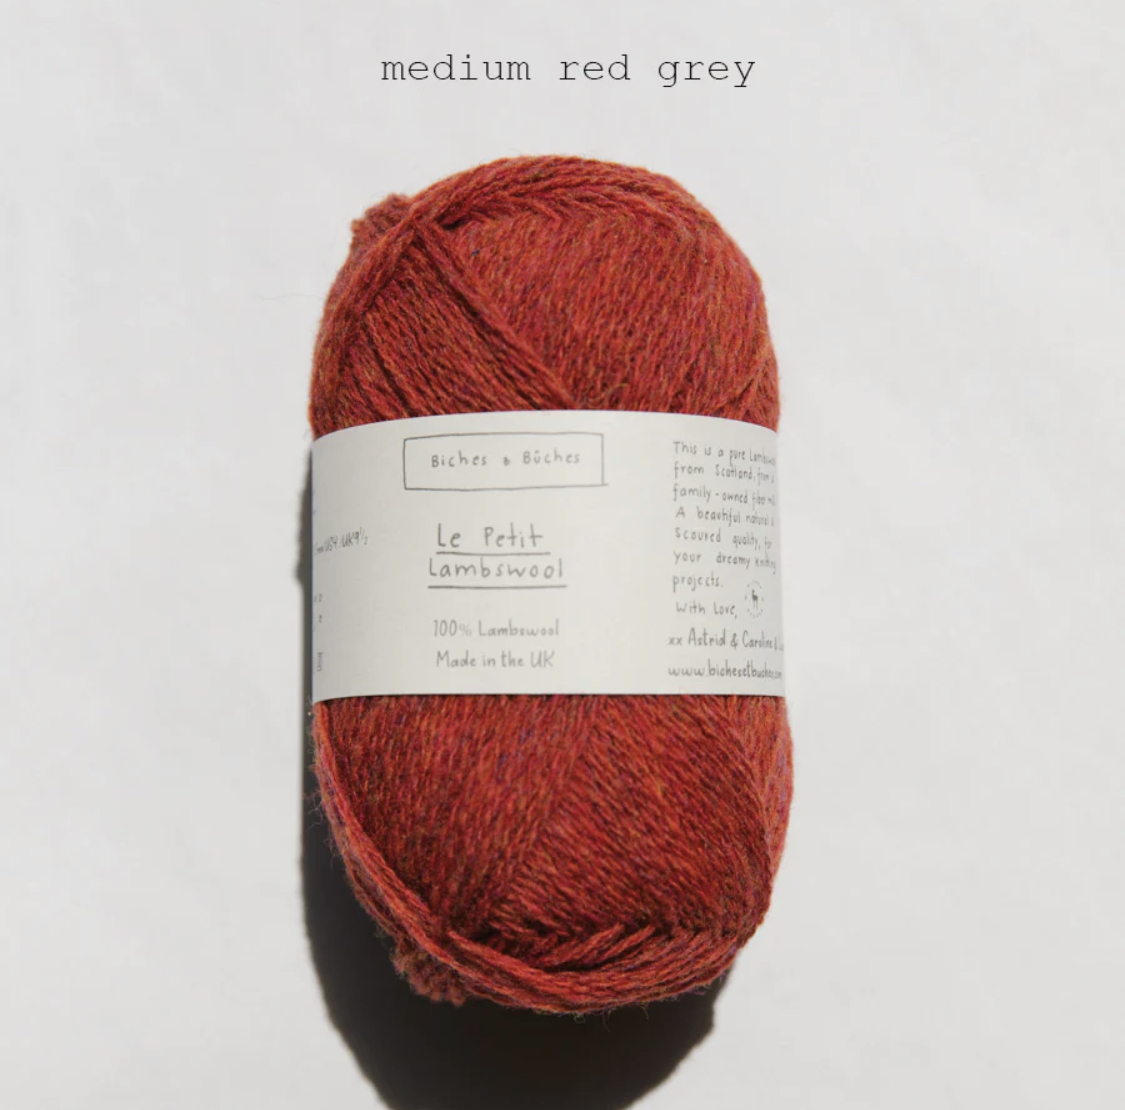 Le petit lambswool / Medium red grey